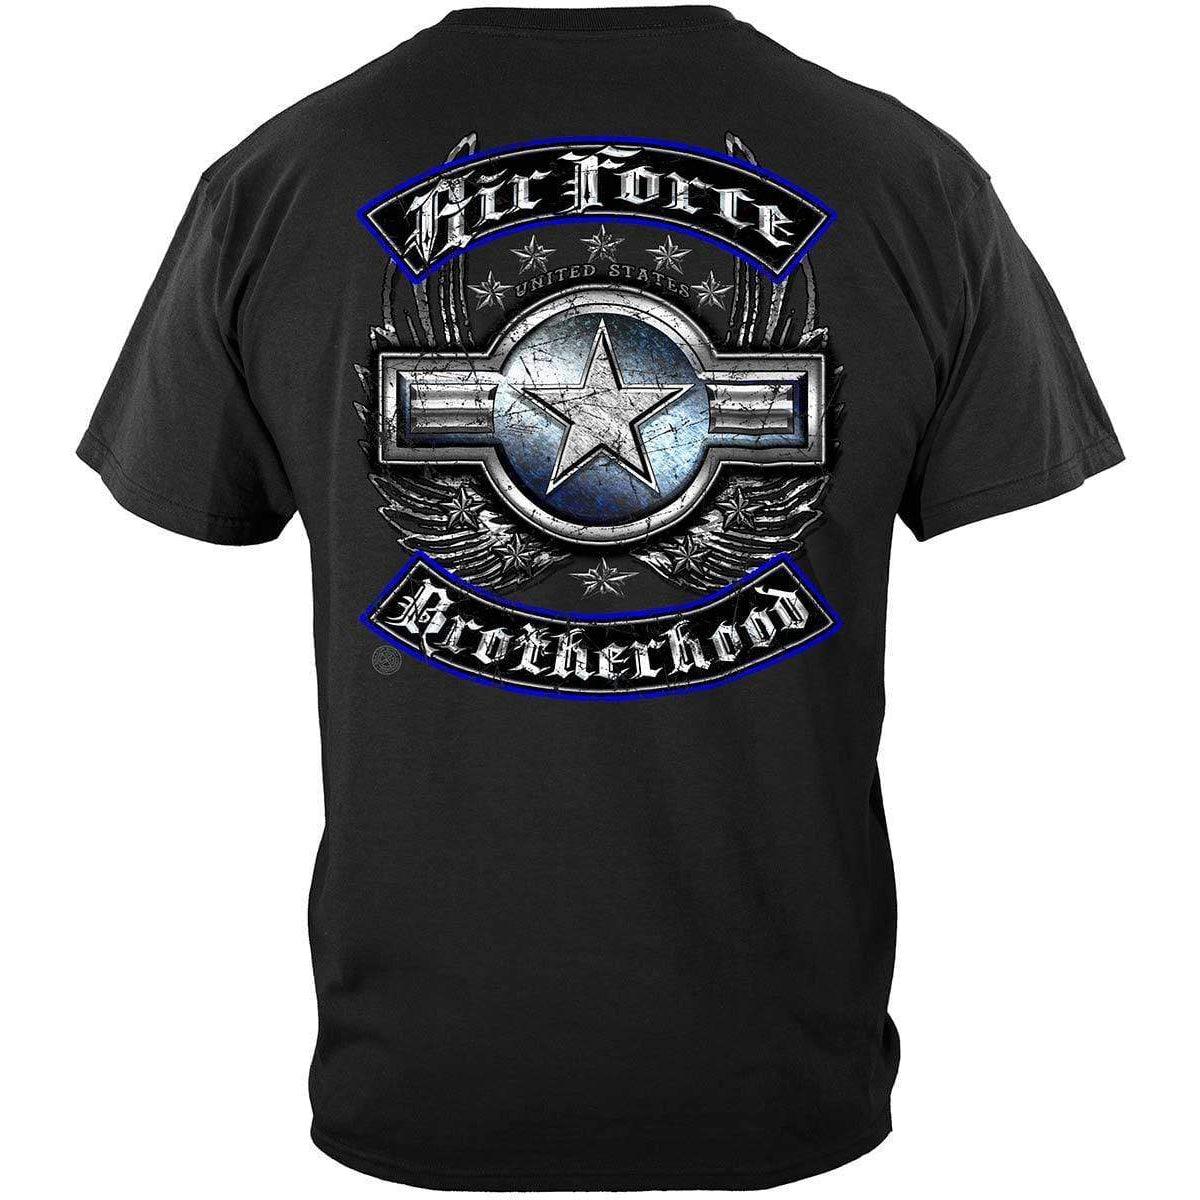 Air Force Brotherhood Long Sleeve - Military Republic